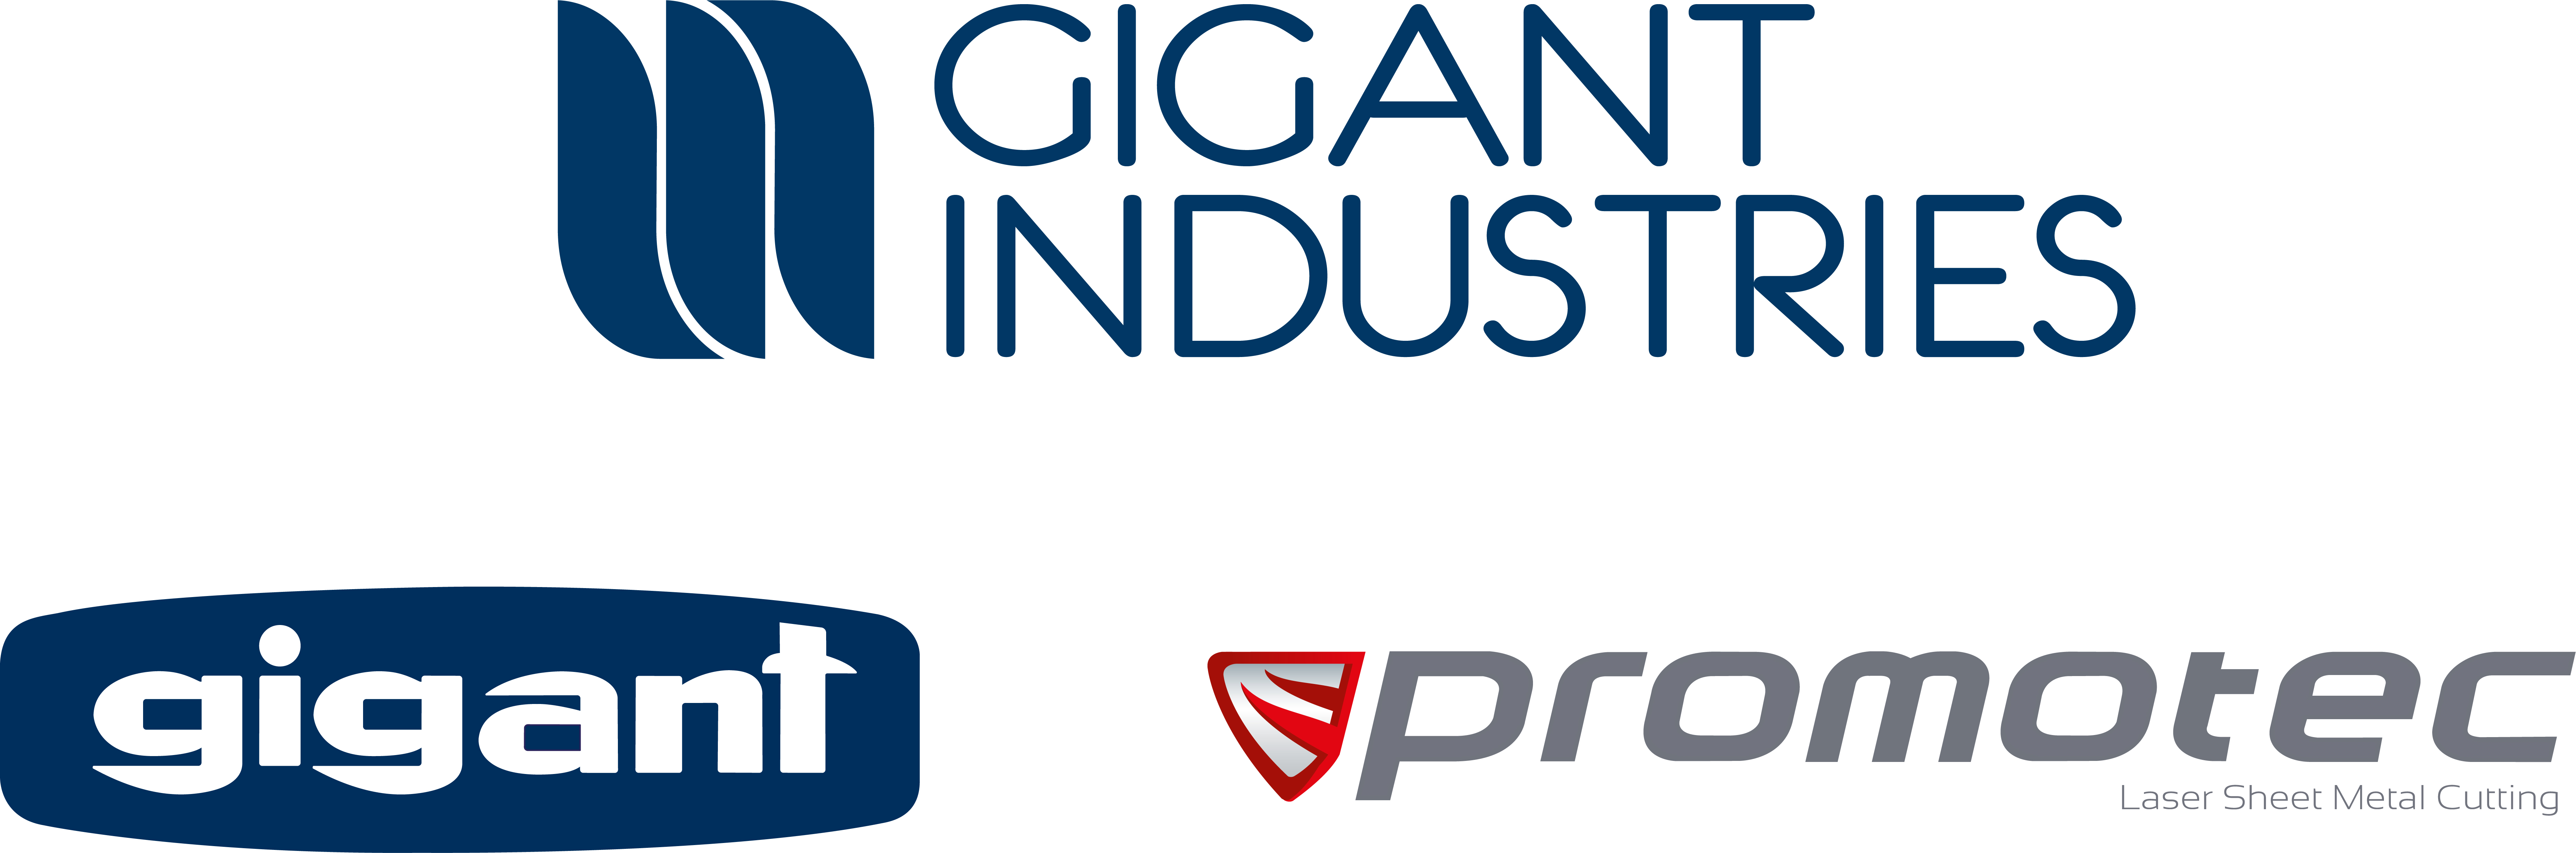 Gigant Industries